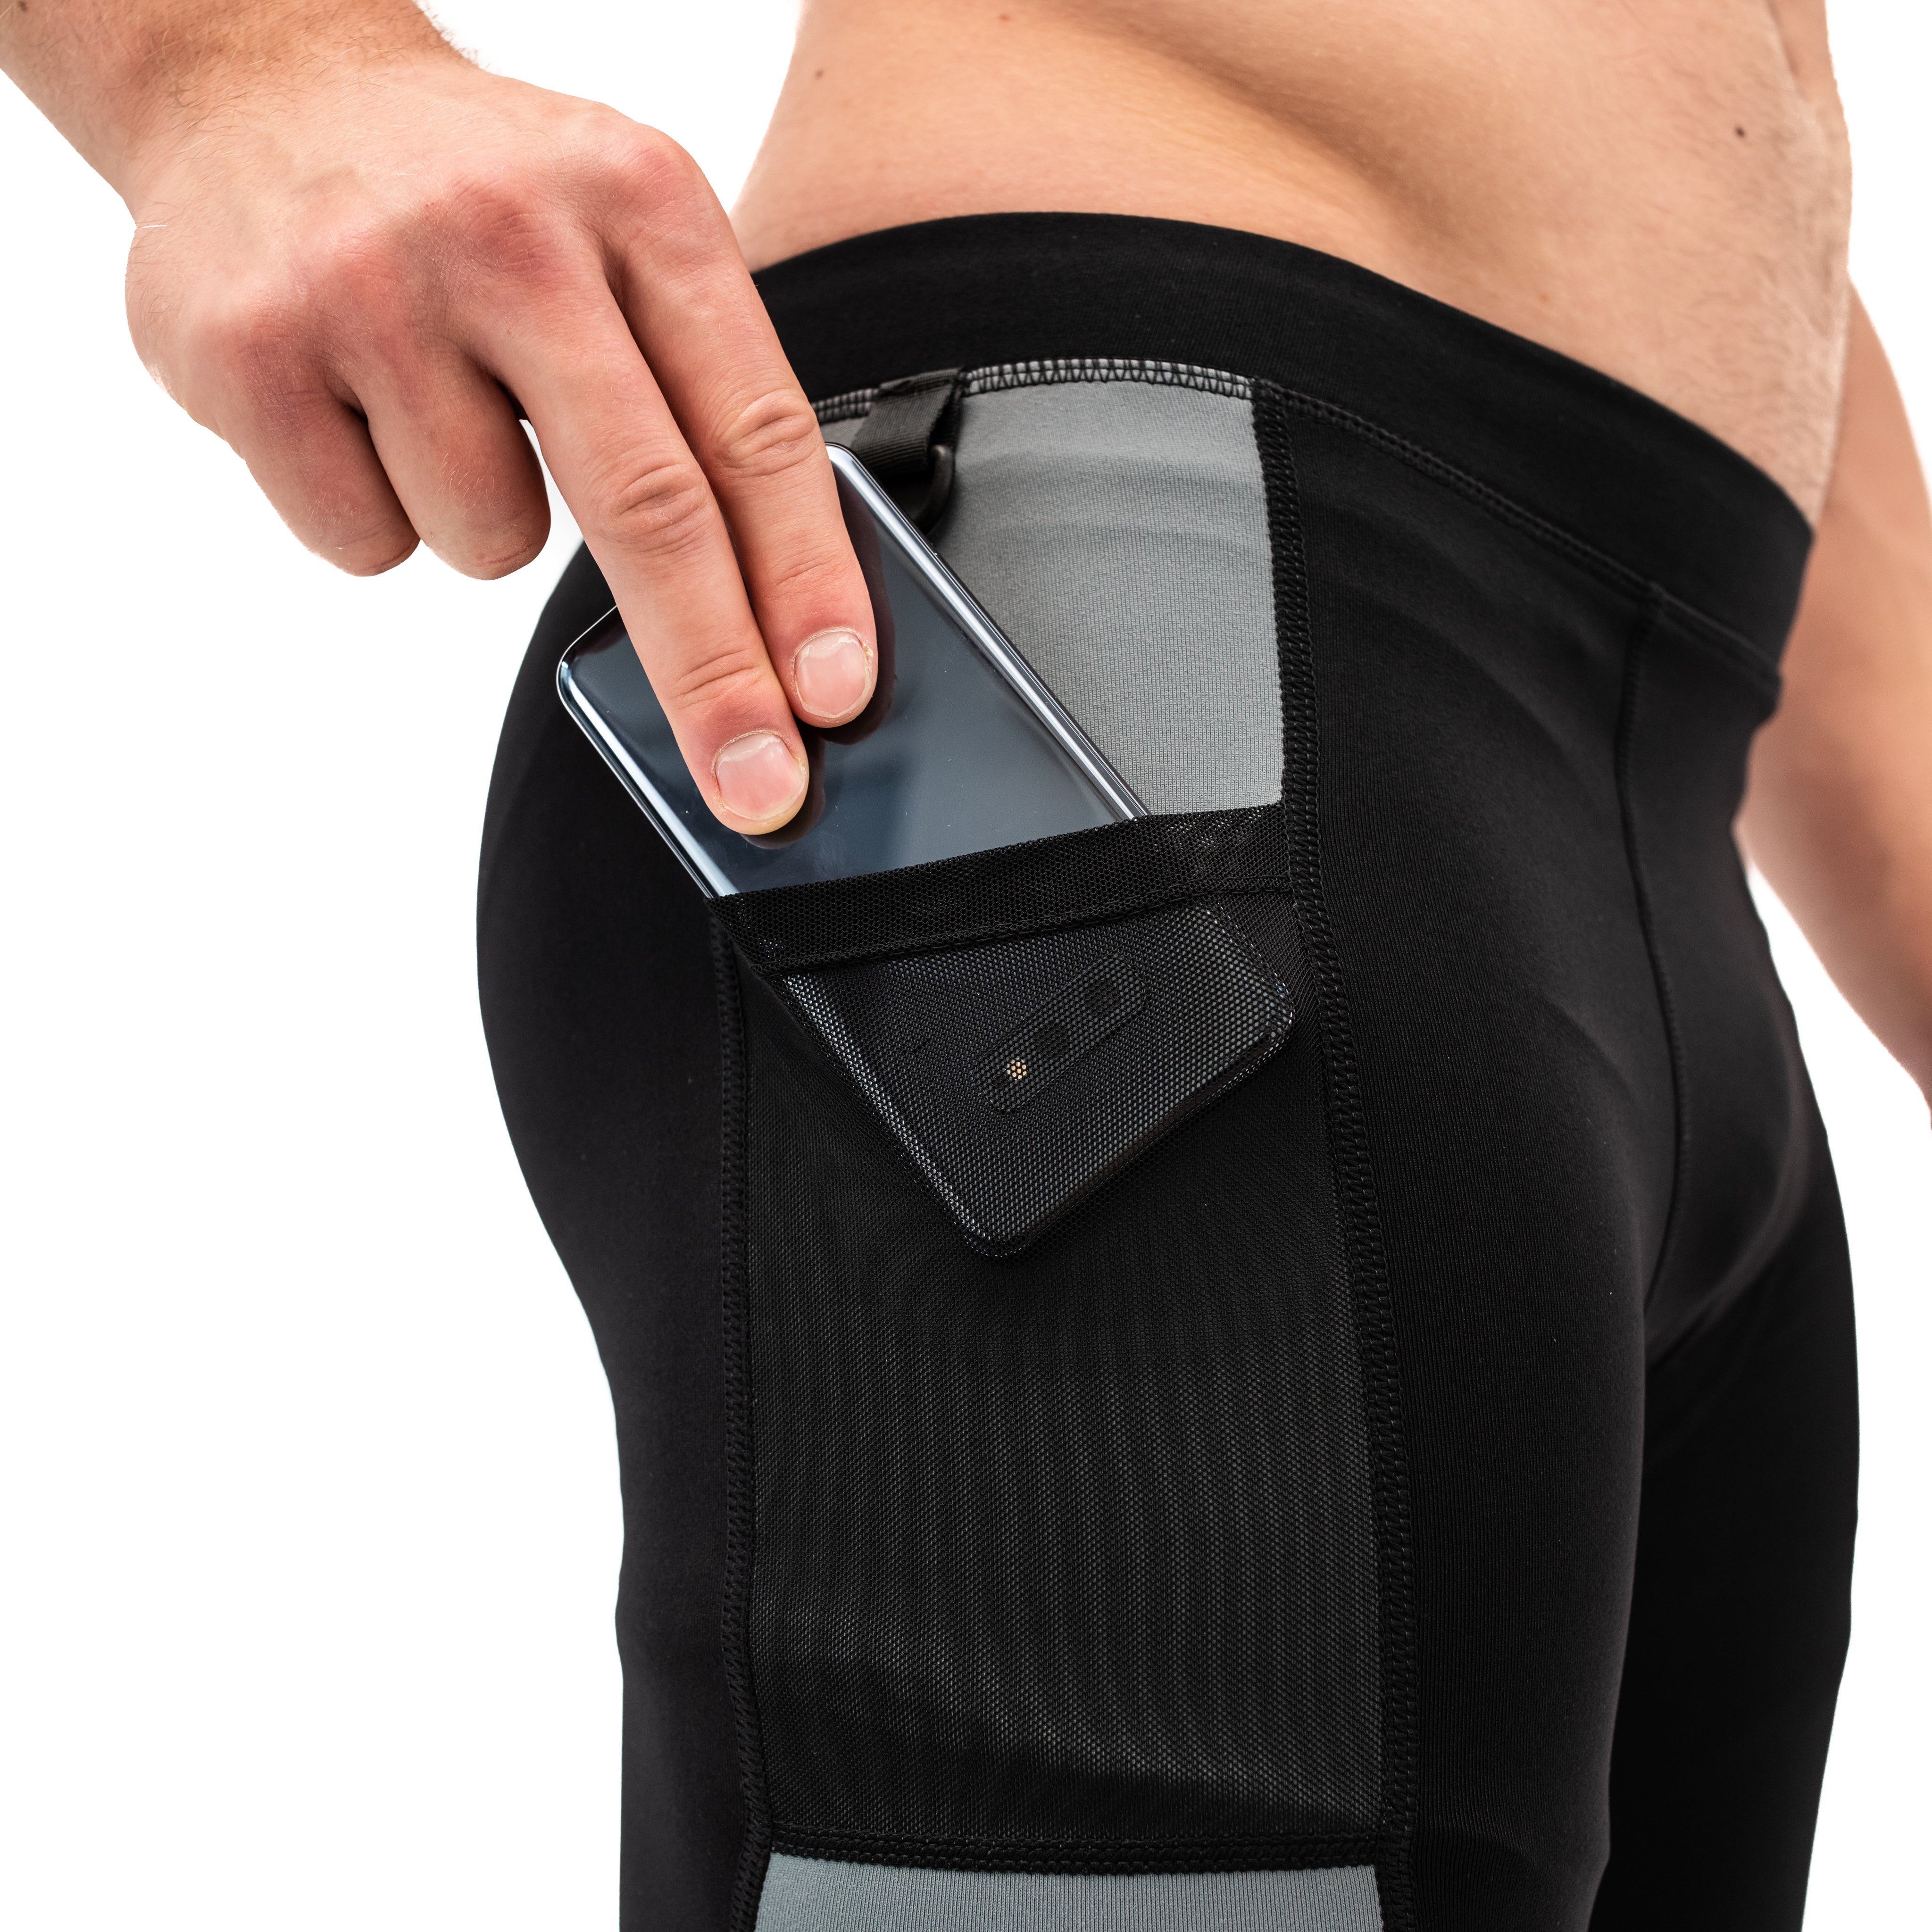 OX Men's Black Gym Compression Pants - Stealth